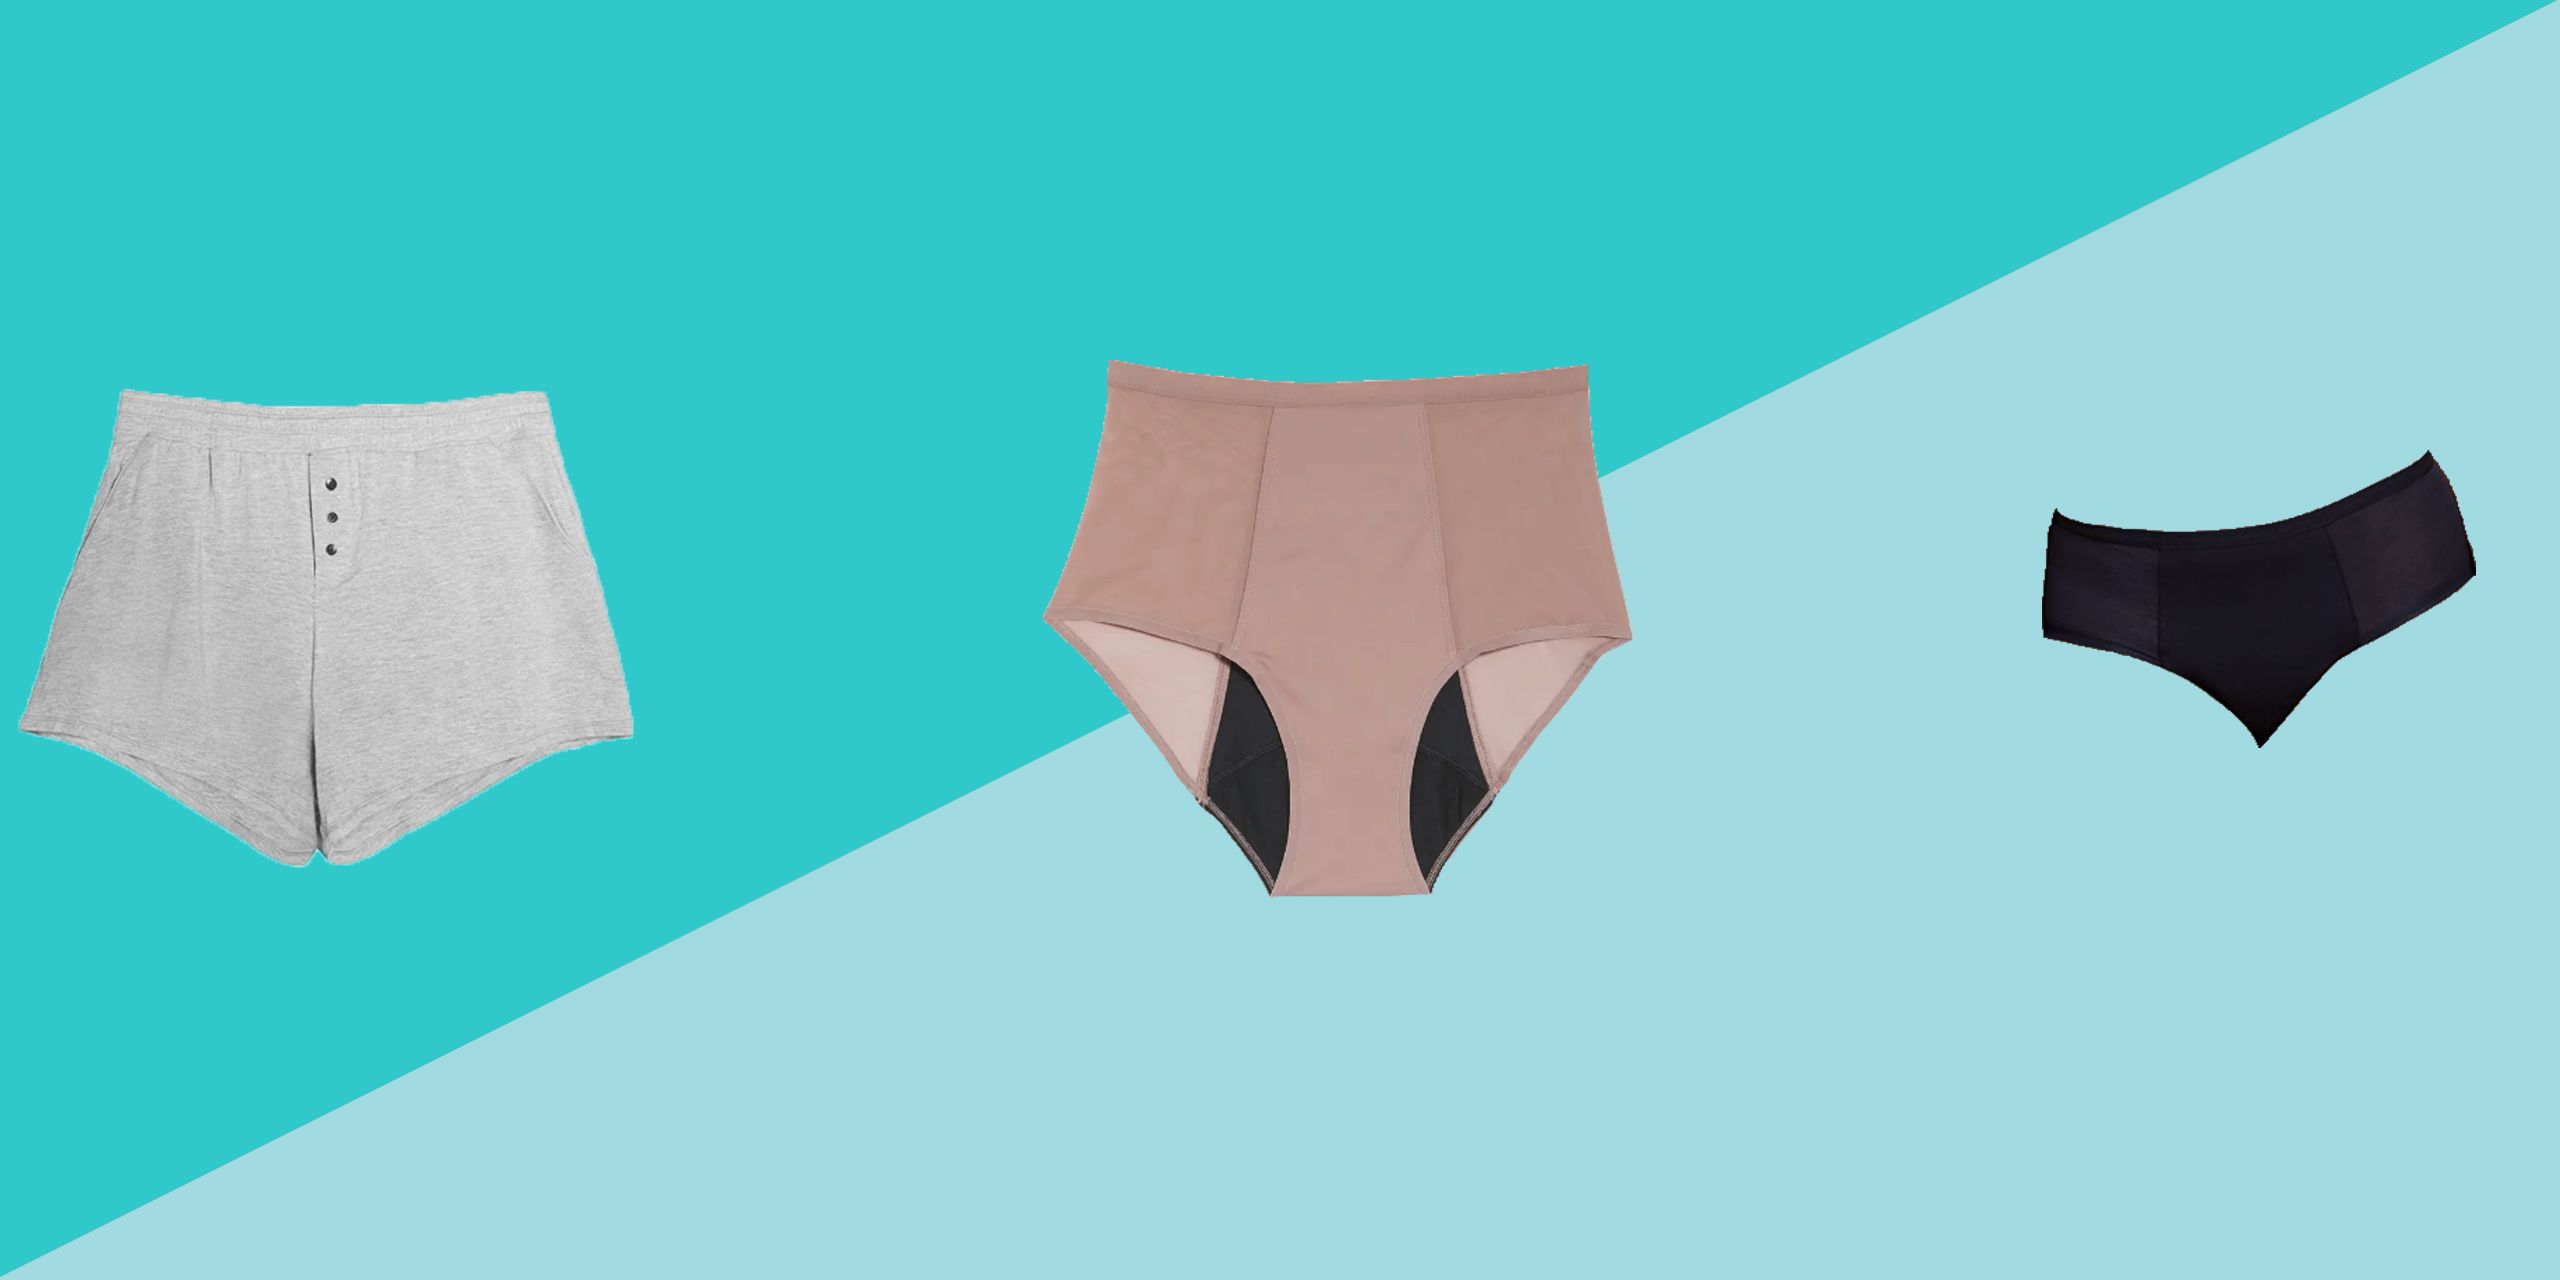 Super Leakproof Boyshort Period Underwear For Teens